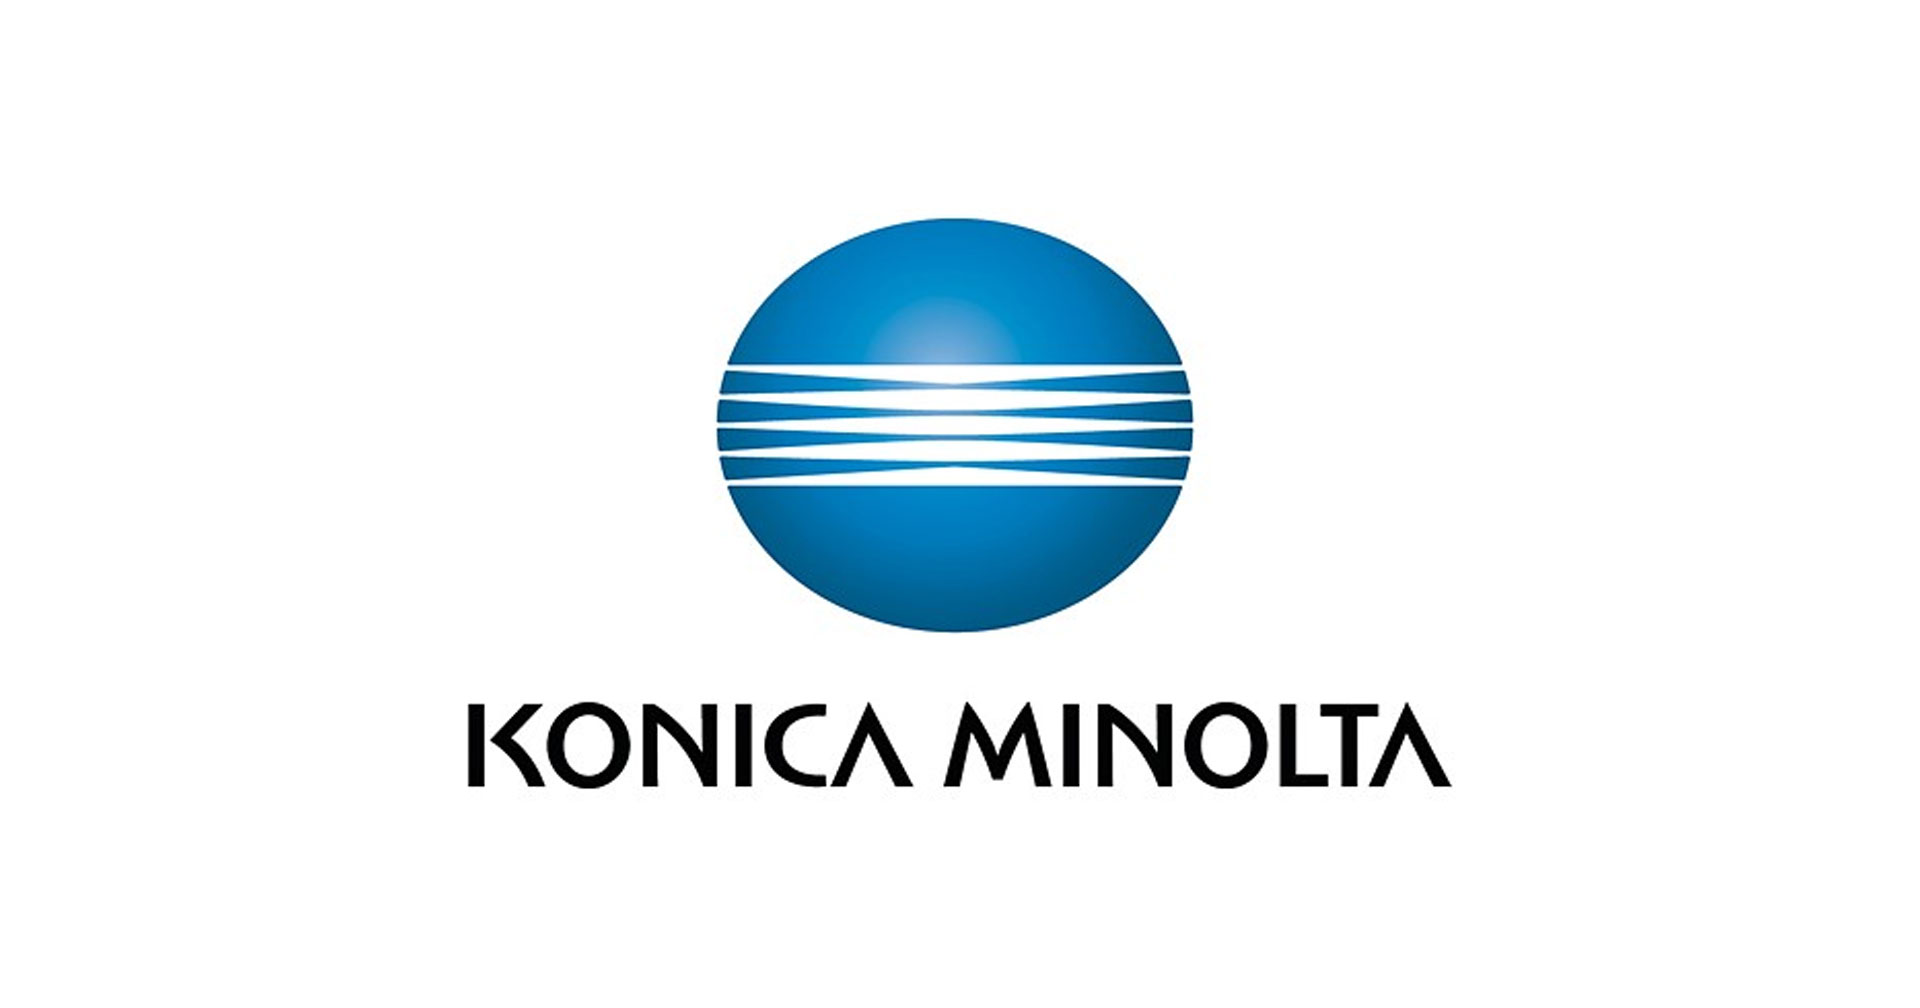 Konica Minolta ปิดศูนย์บริการซ่อมแล้ว หลังจากออกกล้องตัวสุดท้ายเมื่อ 17 ปีก่อน